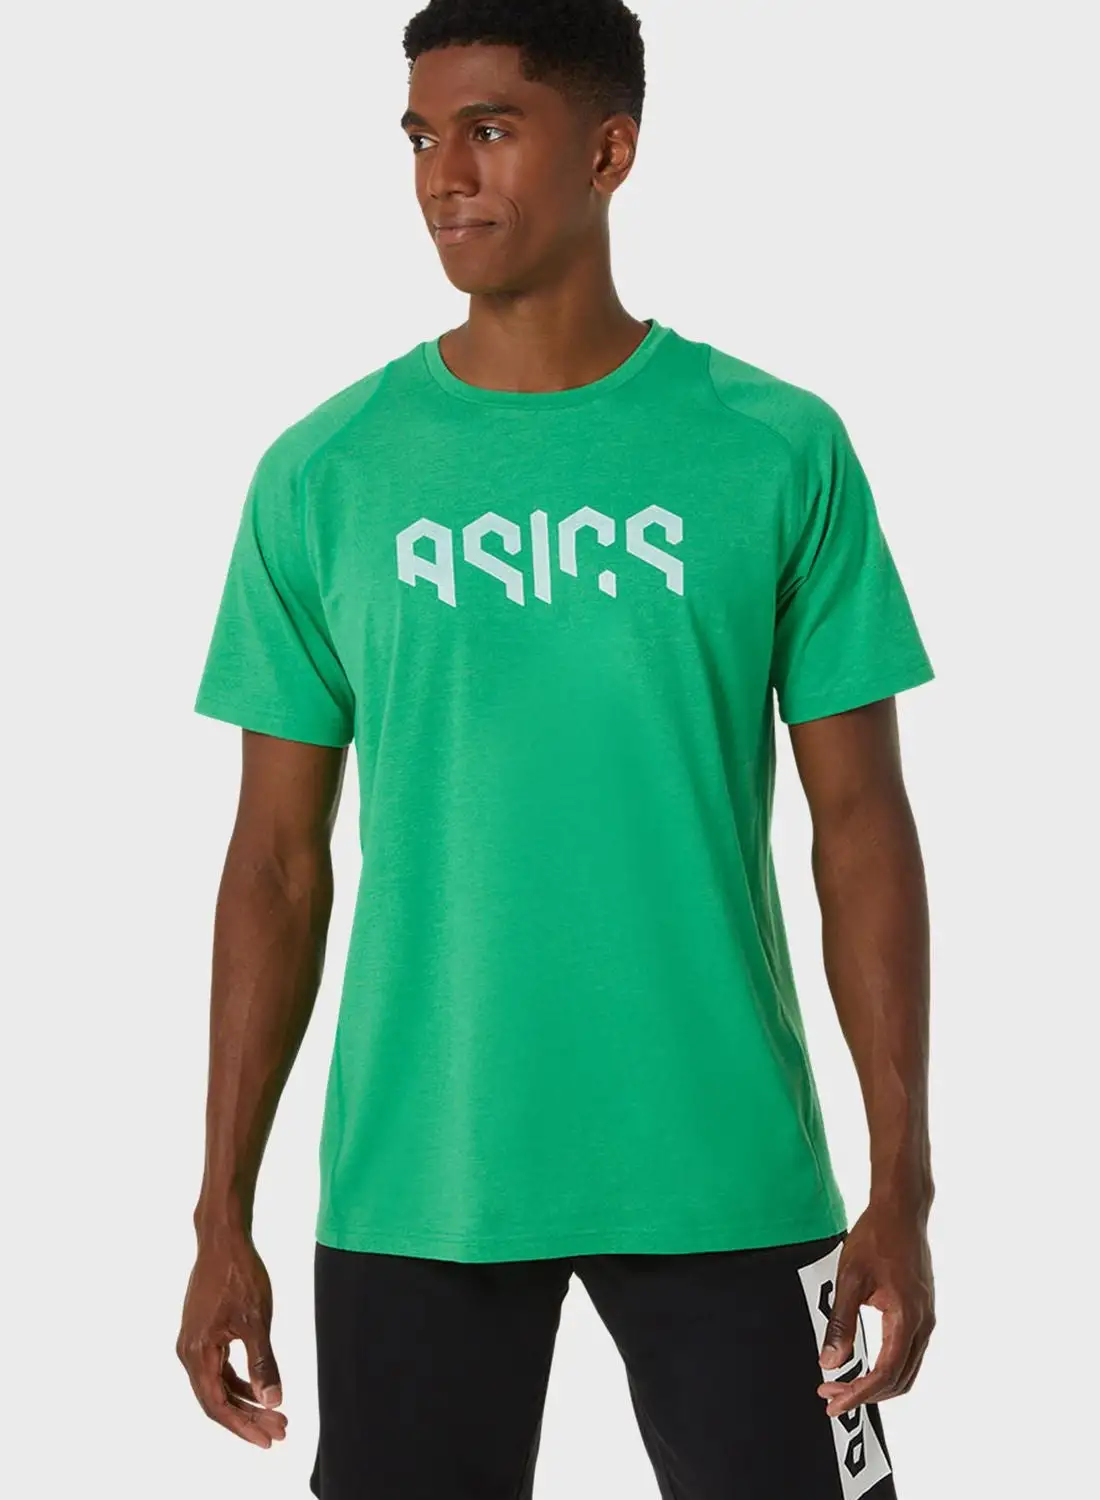 asics Hex Graphic Logo T-Shirt